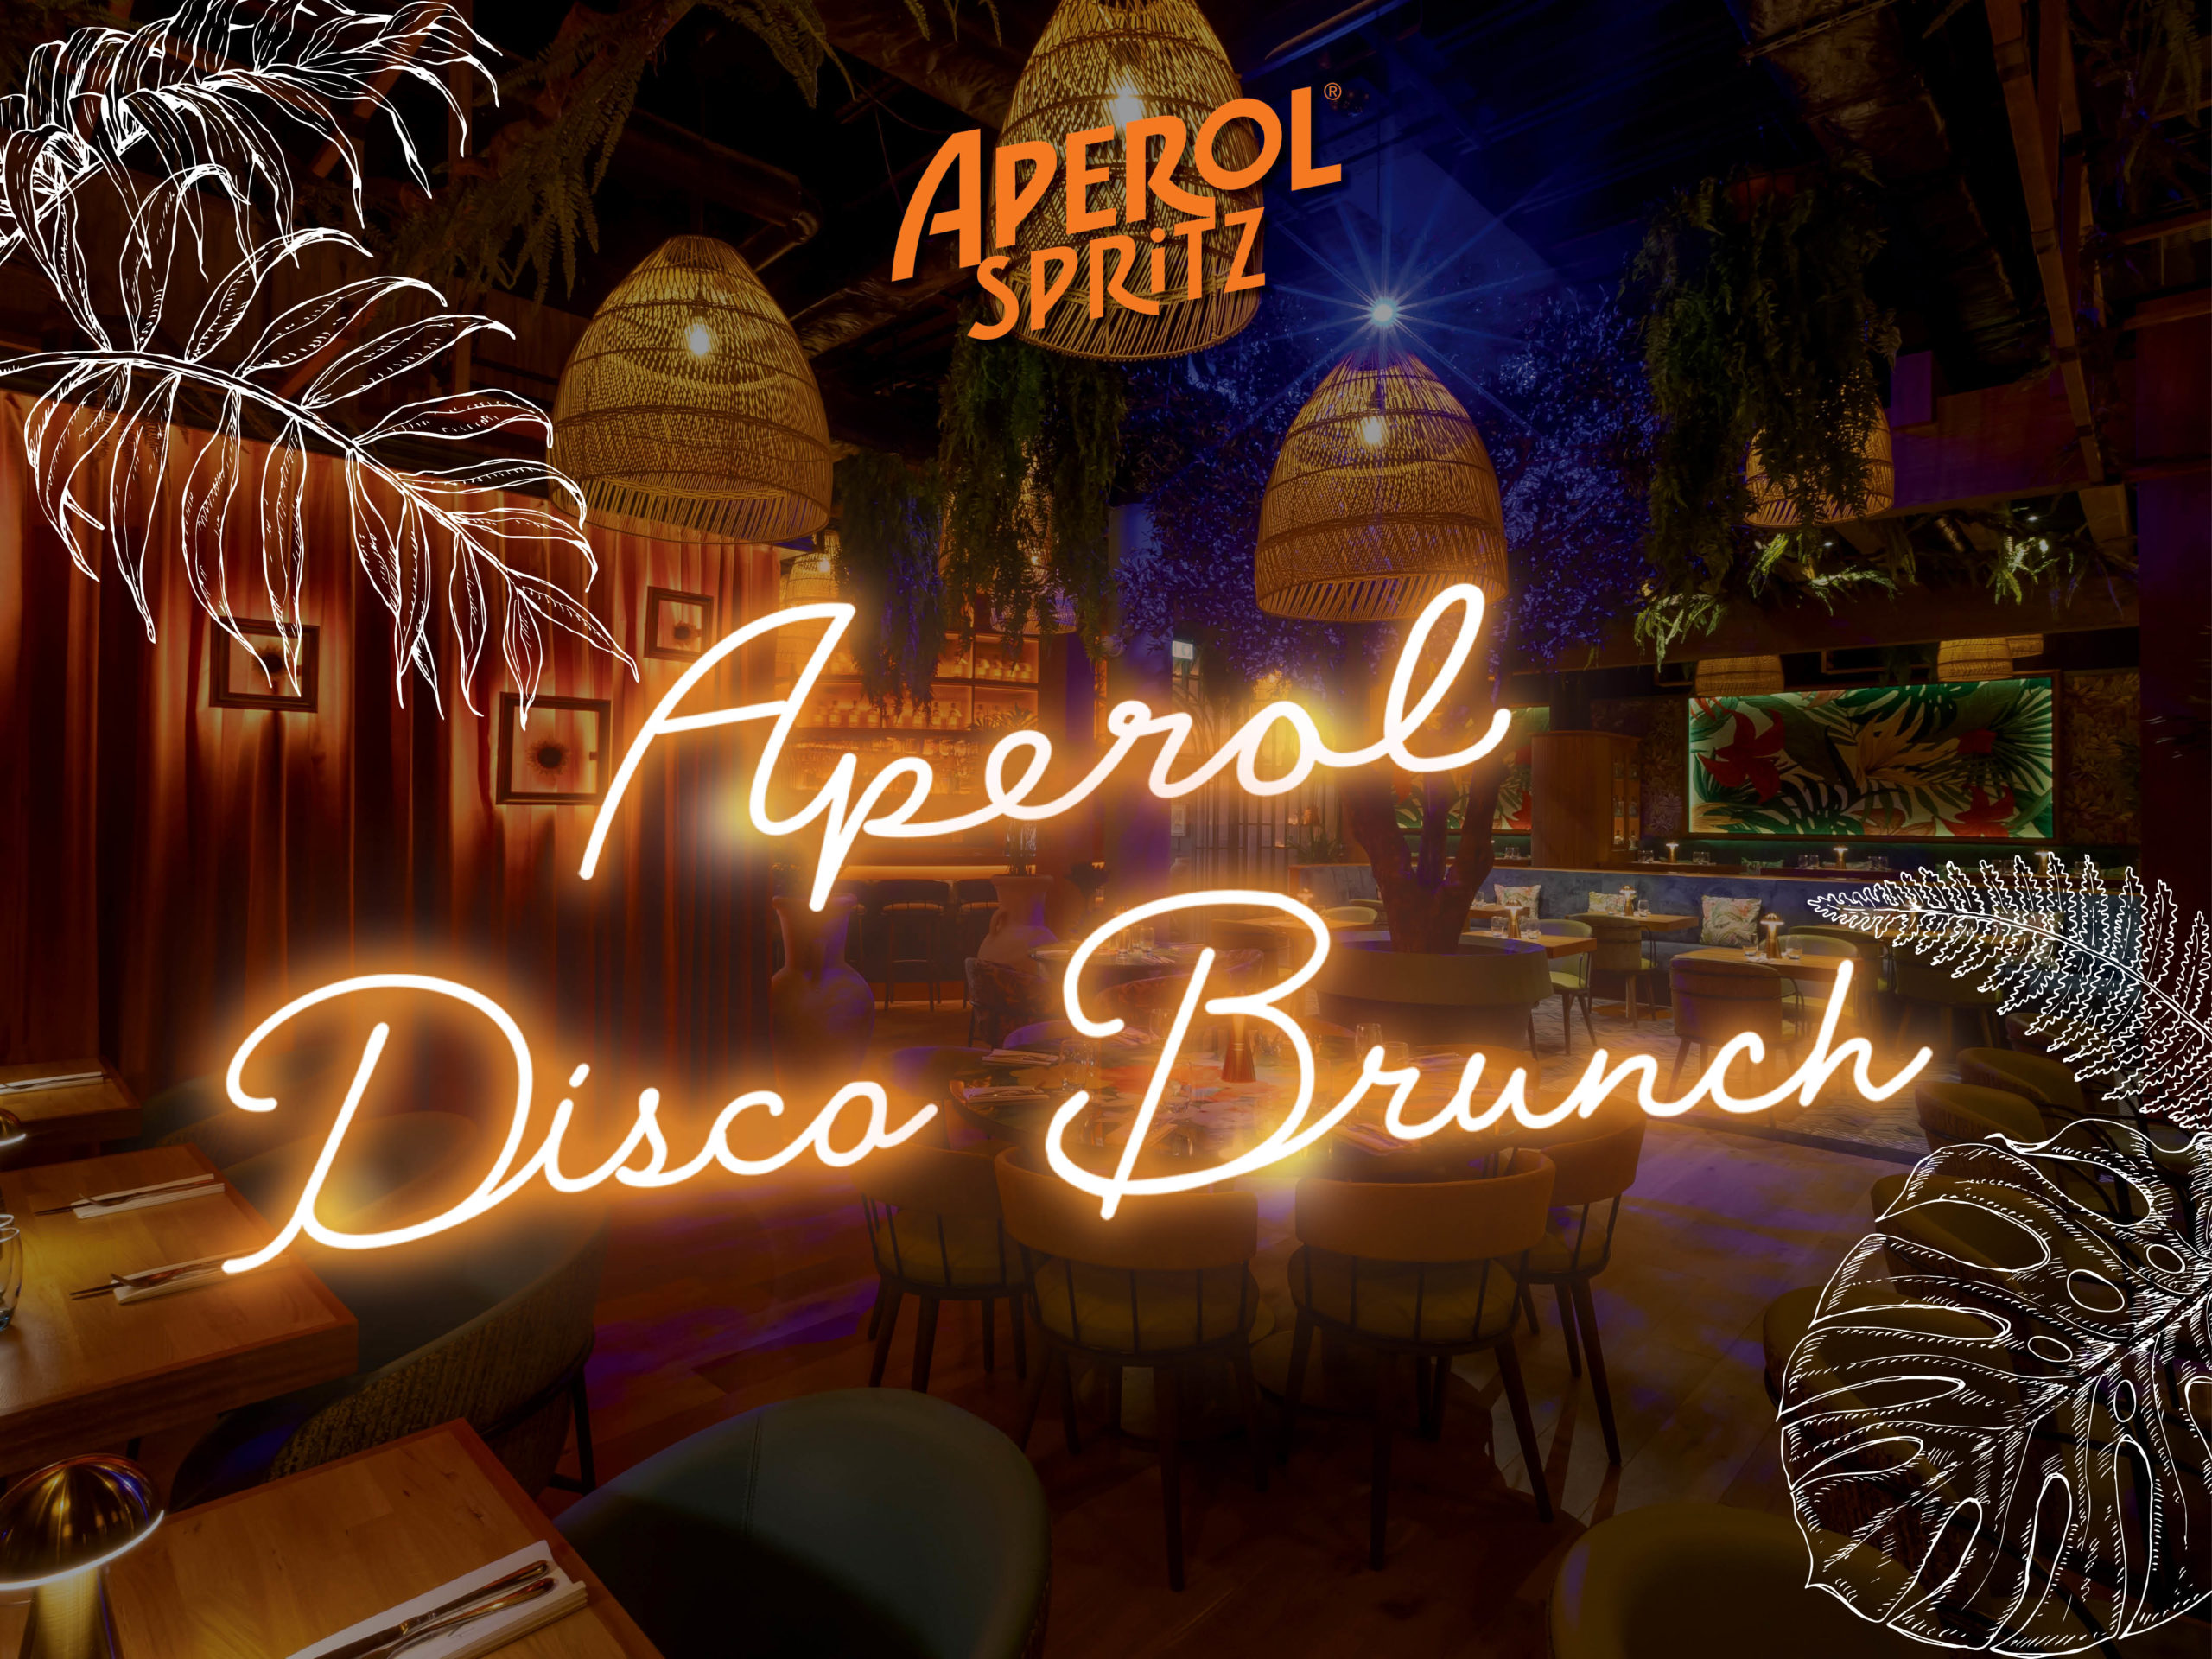 Aperol Disco Brunch poster